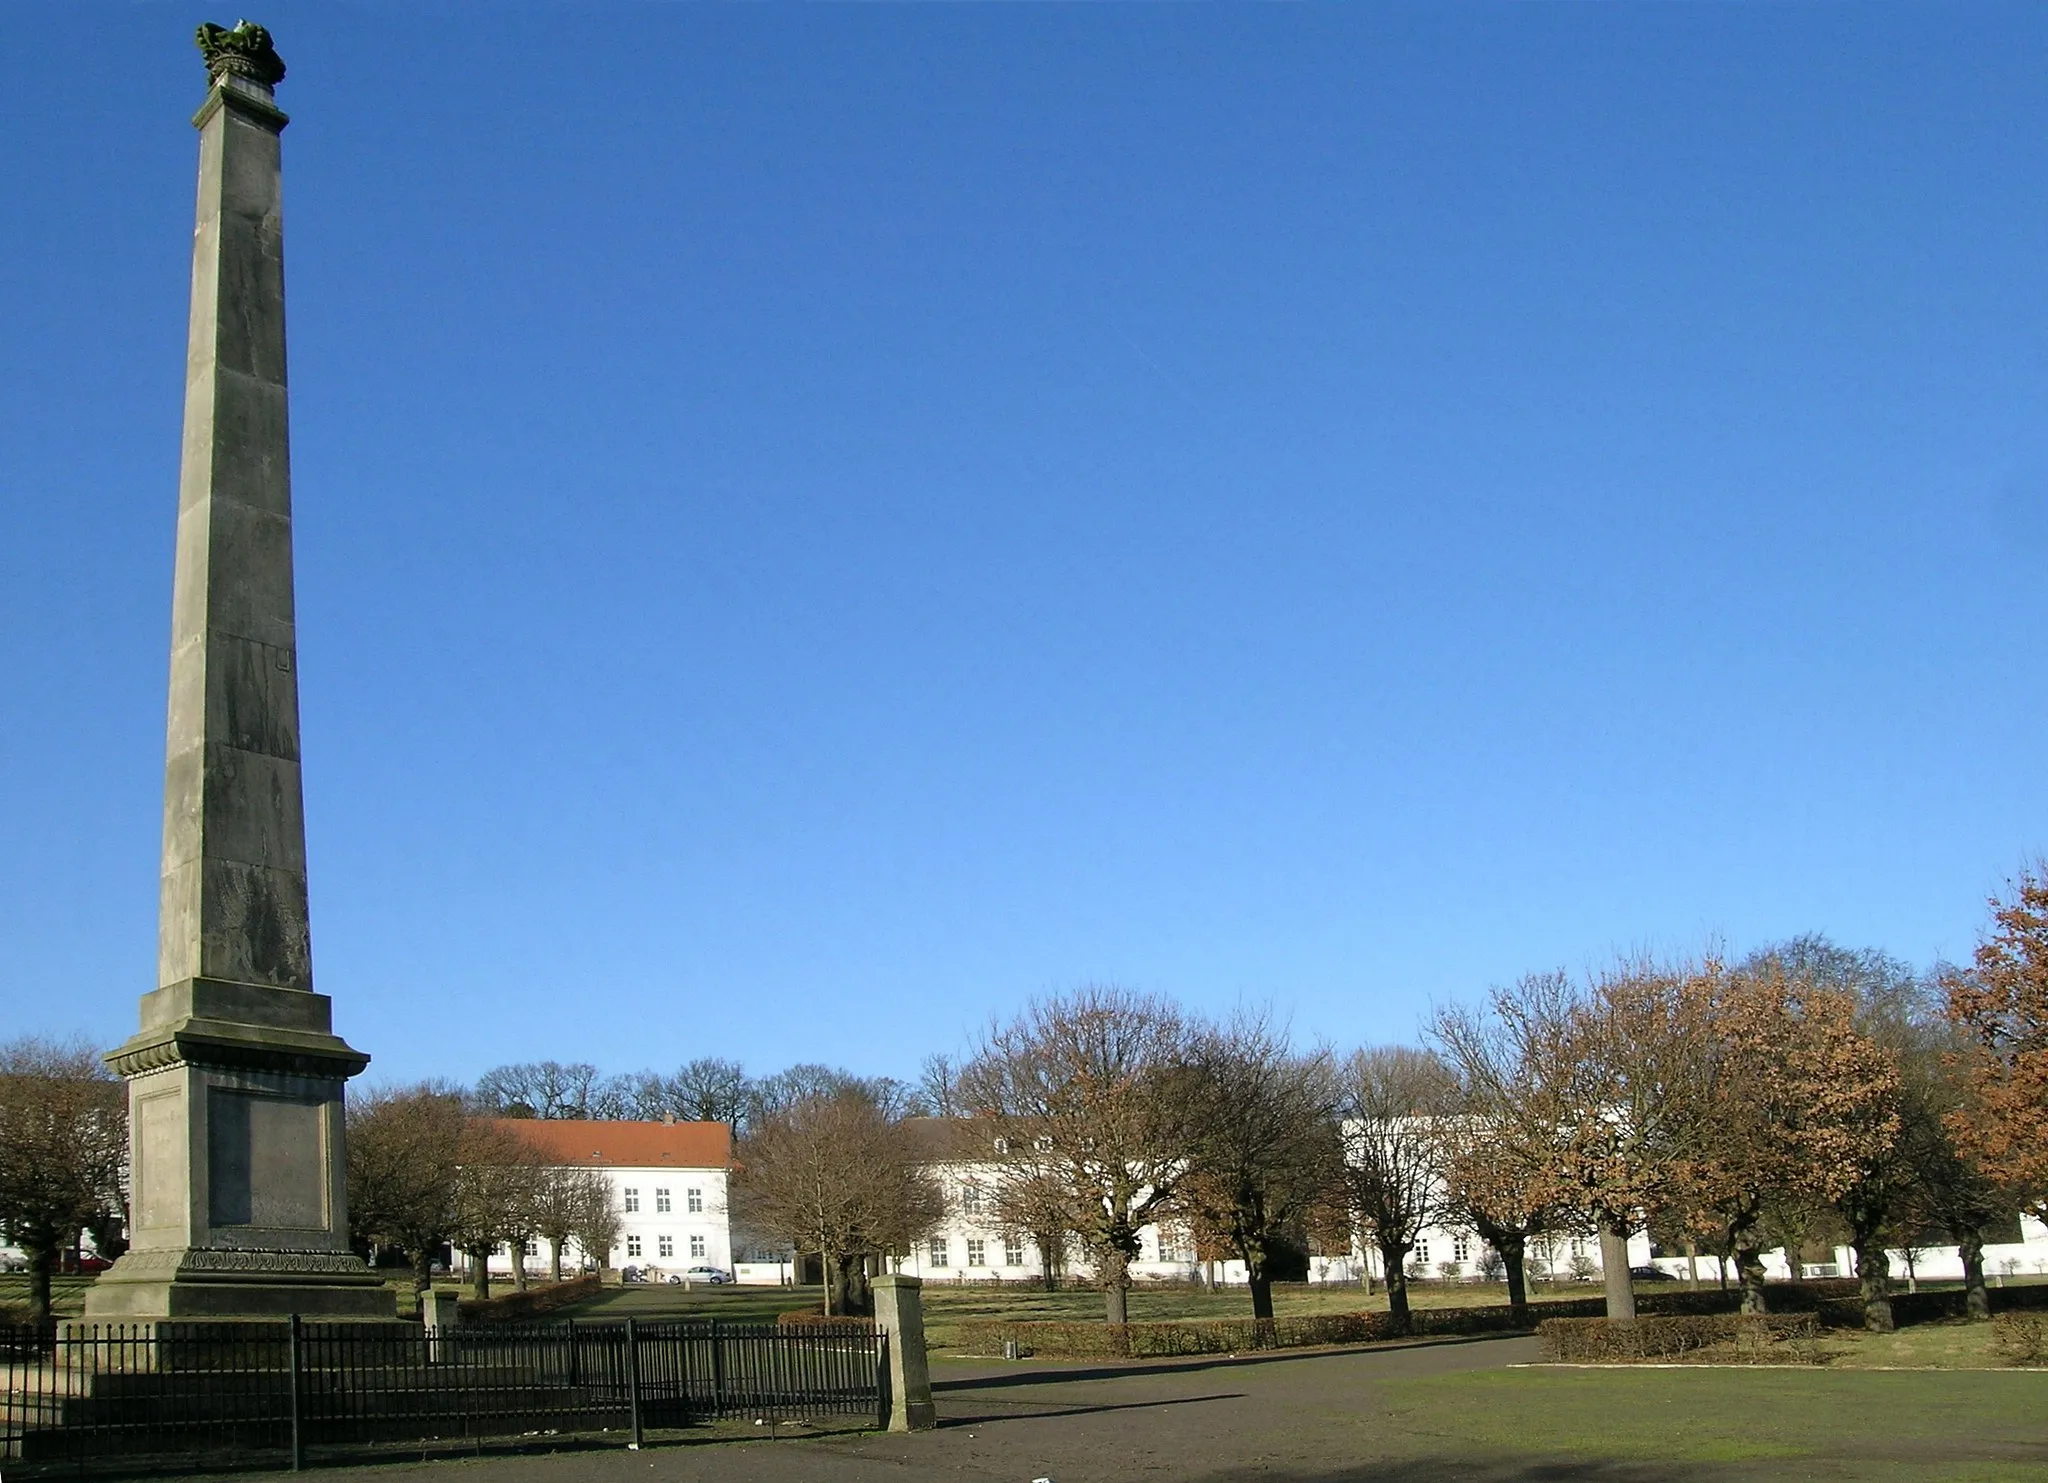 Photo showing: Häuser d. Circus Putbus mit Obelisk